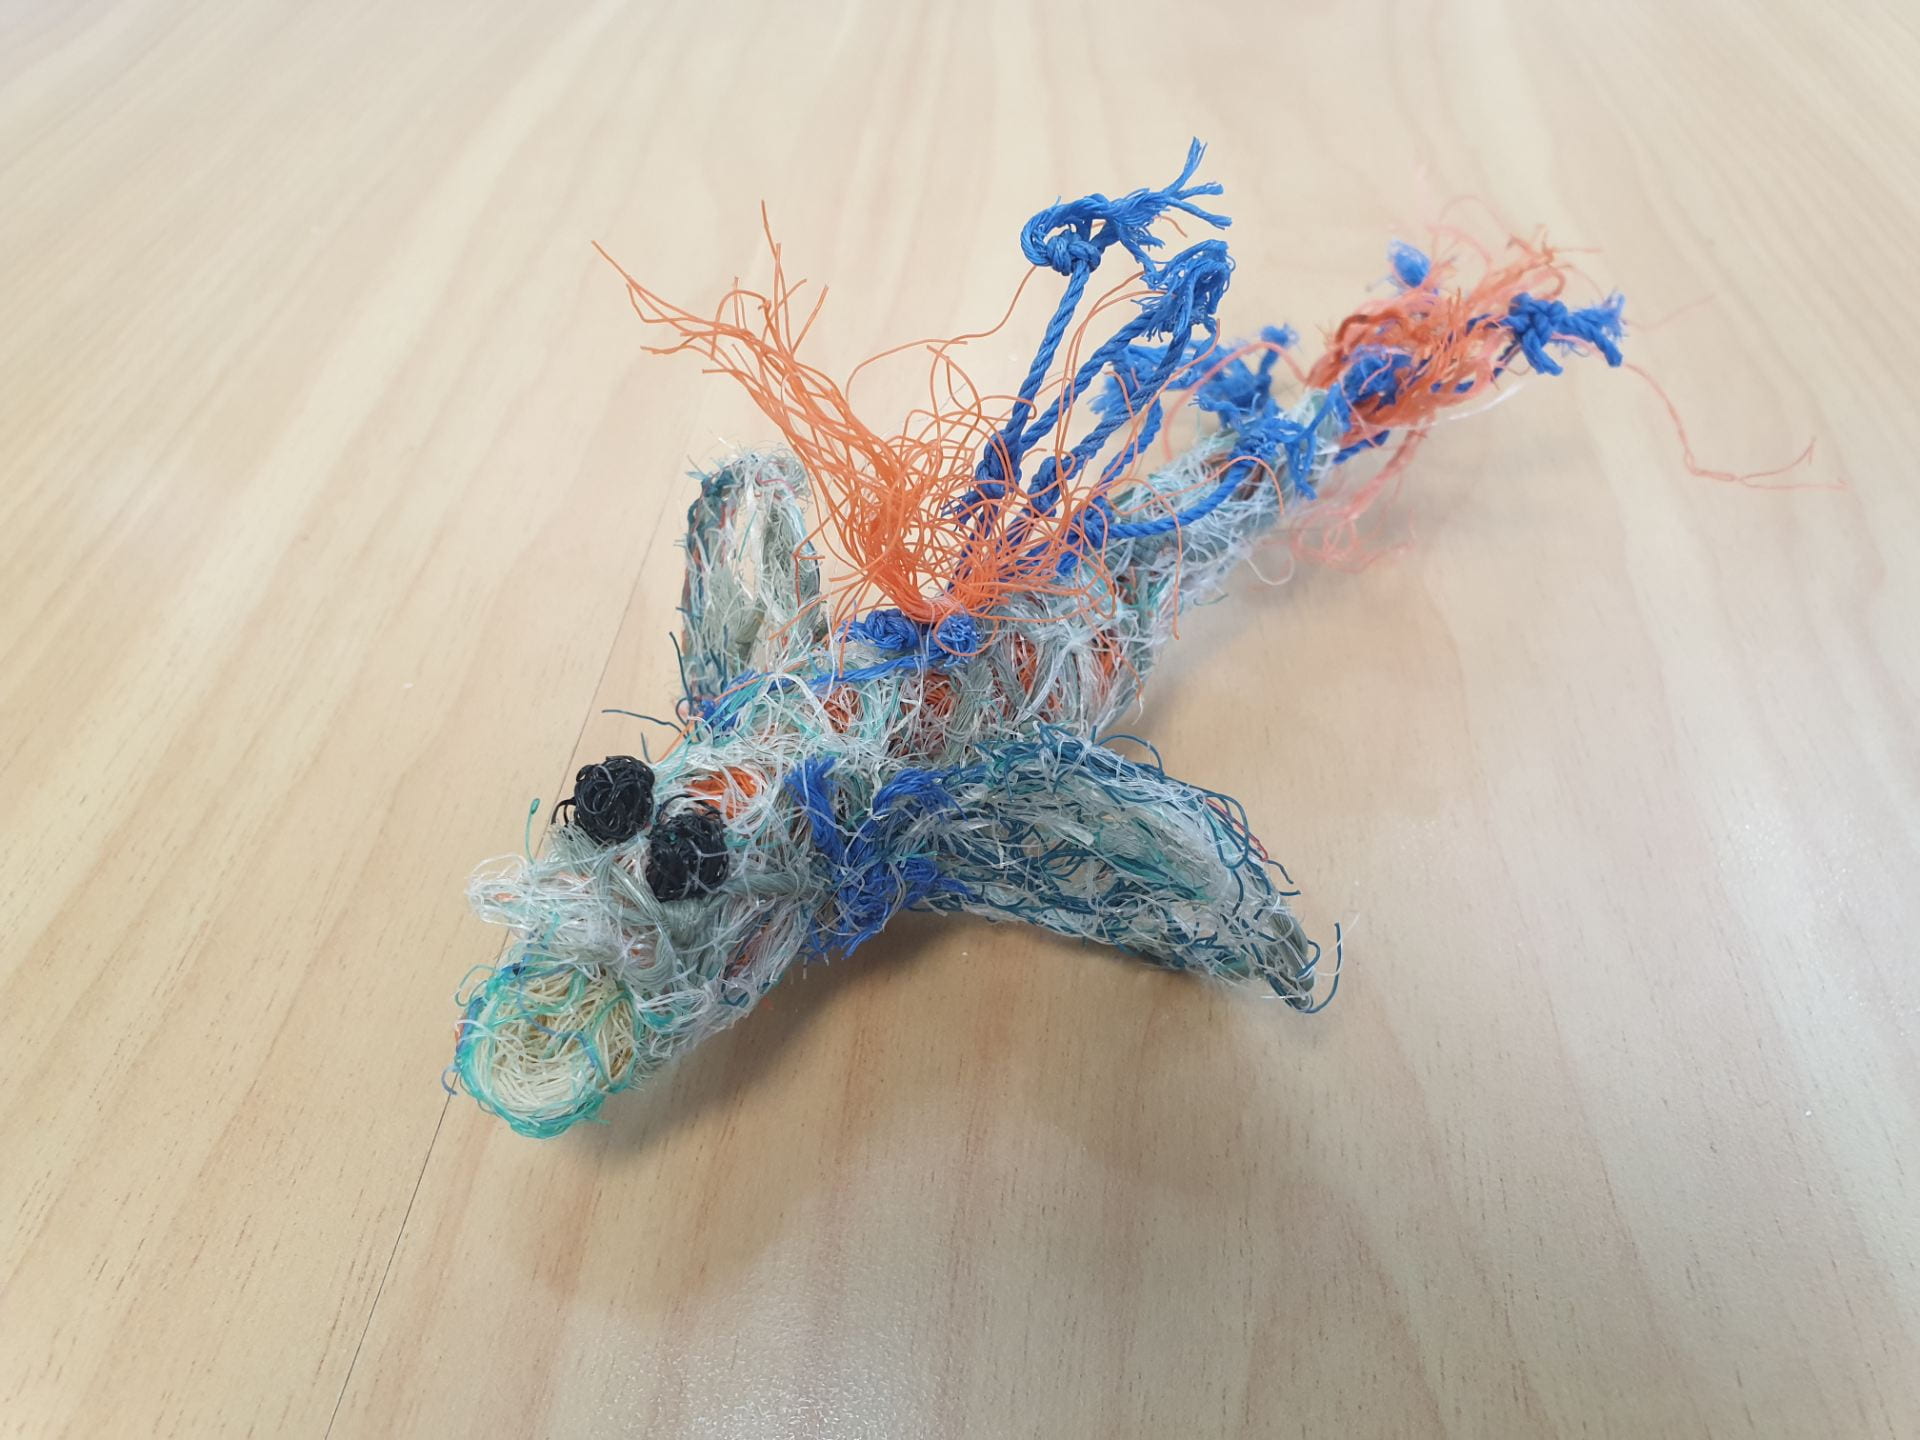 A mudskipper fish made from plastic fishing nets